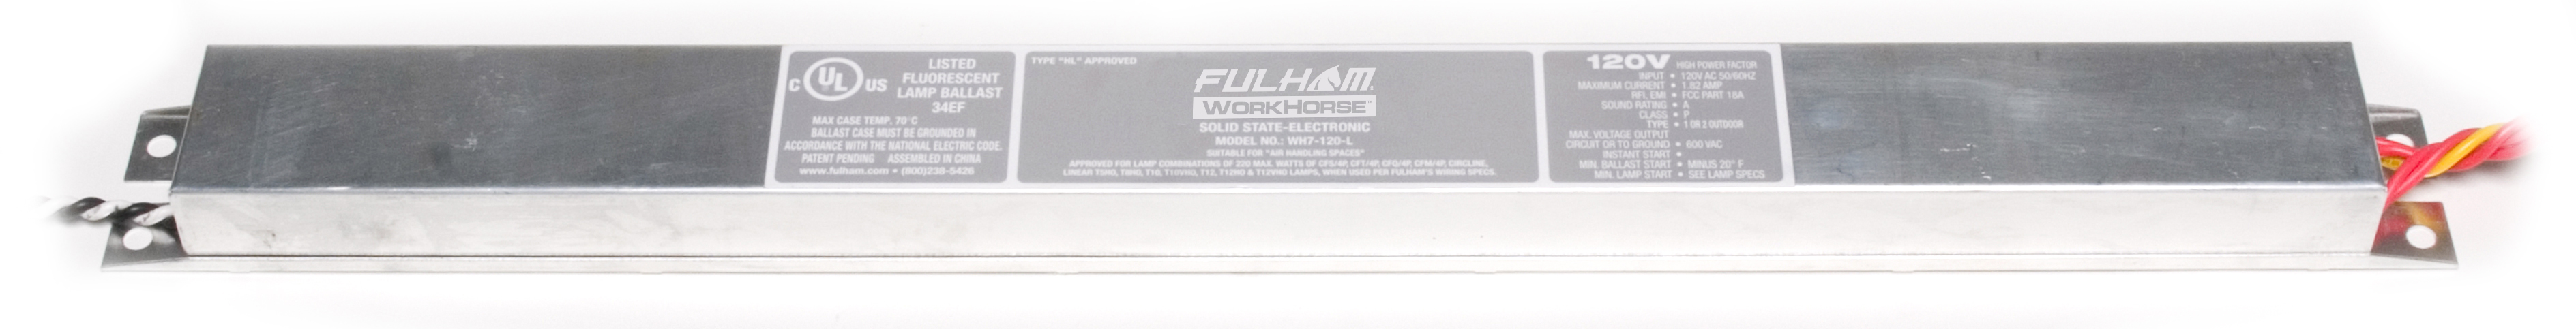 FULHAM® WH7-120-L